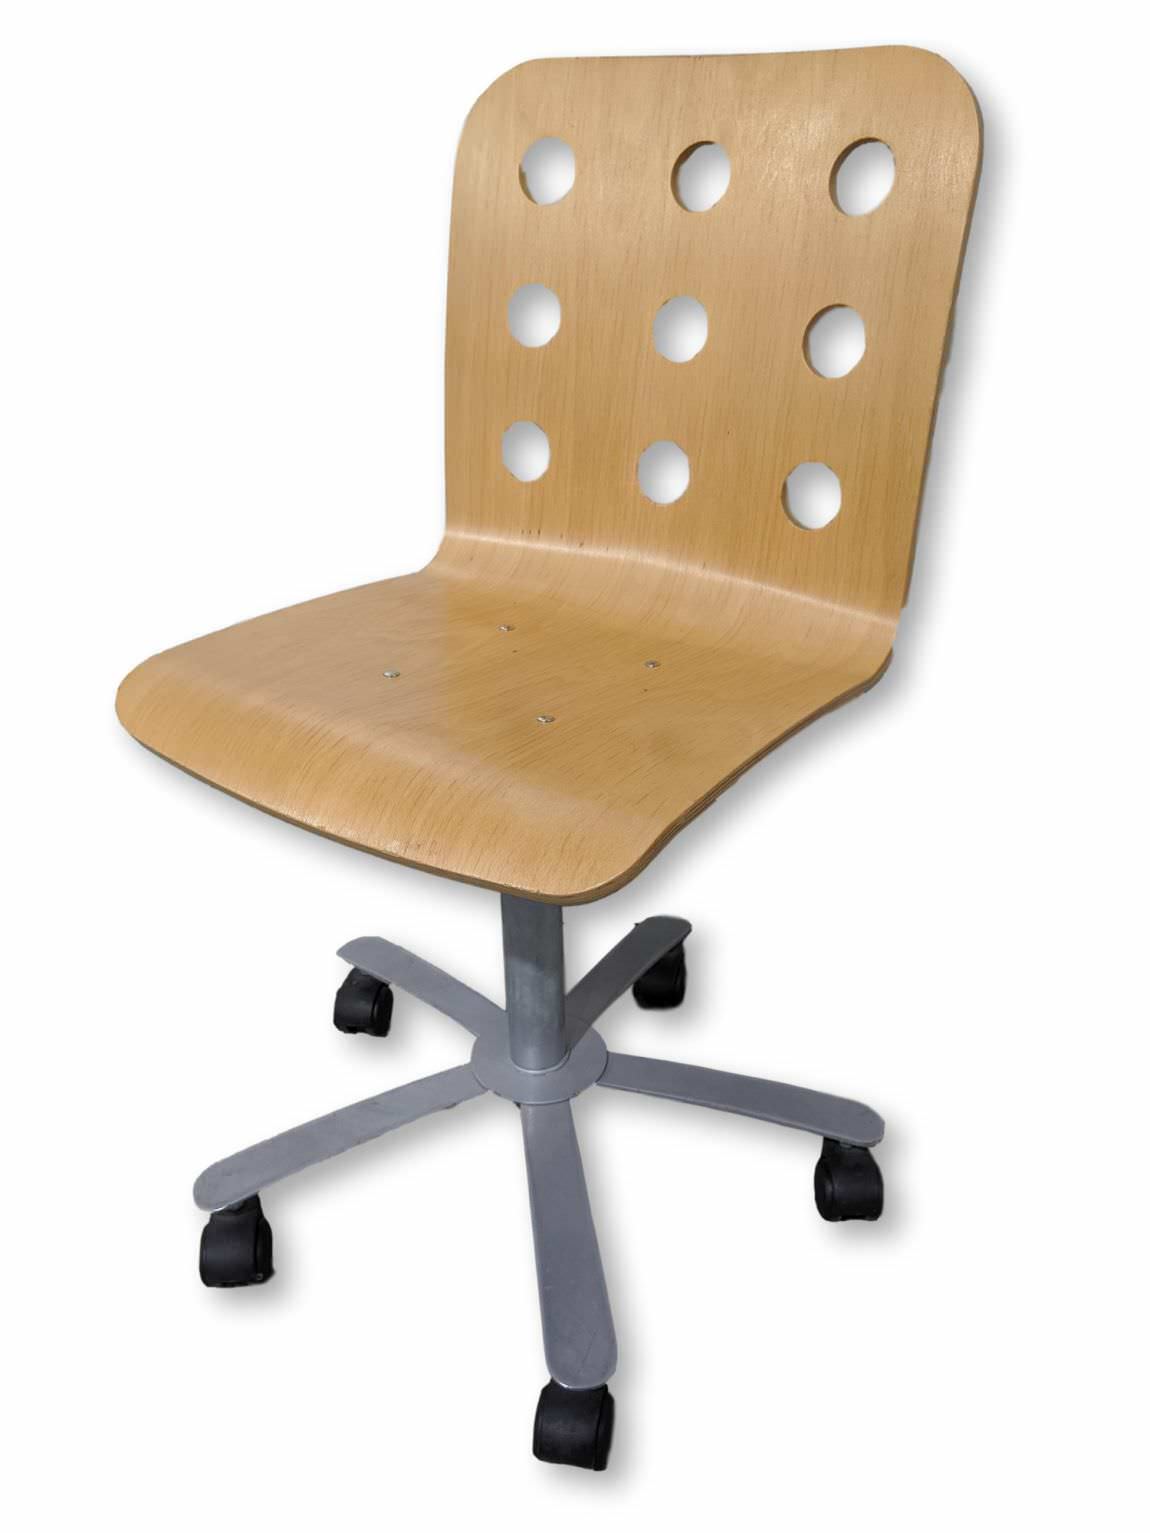 Rolling Swivel Chair with Oak Finish